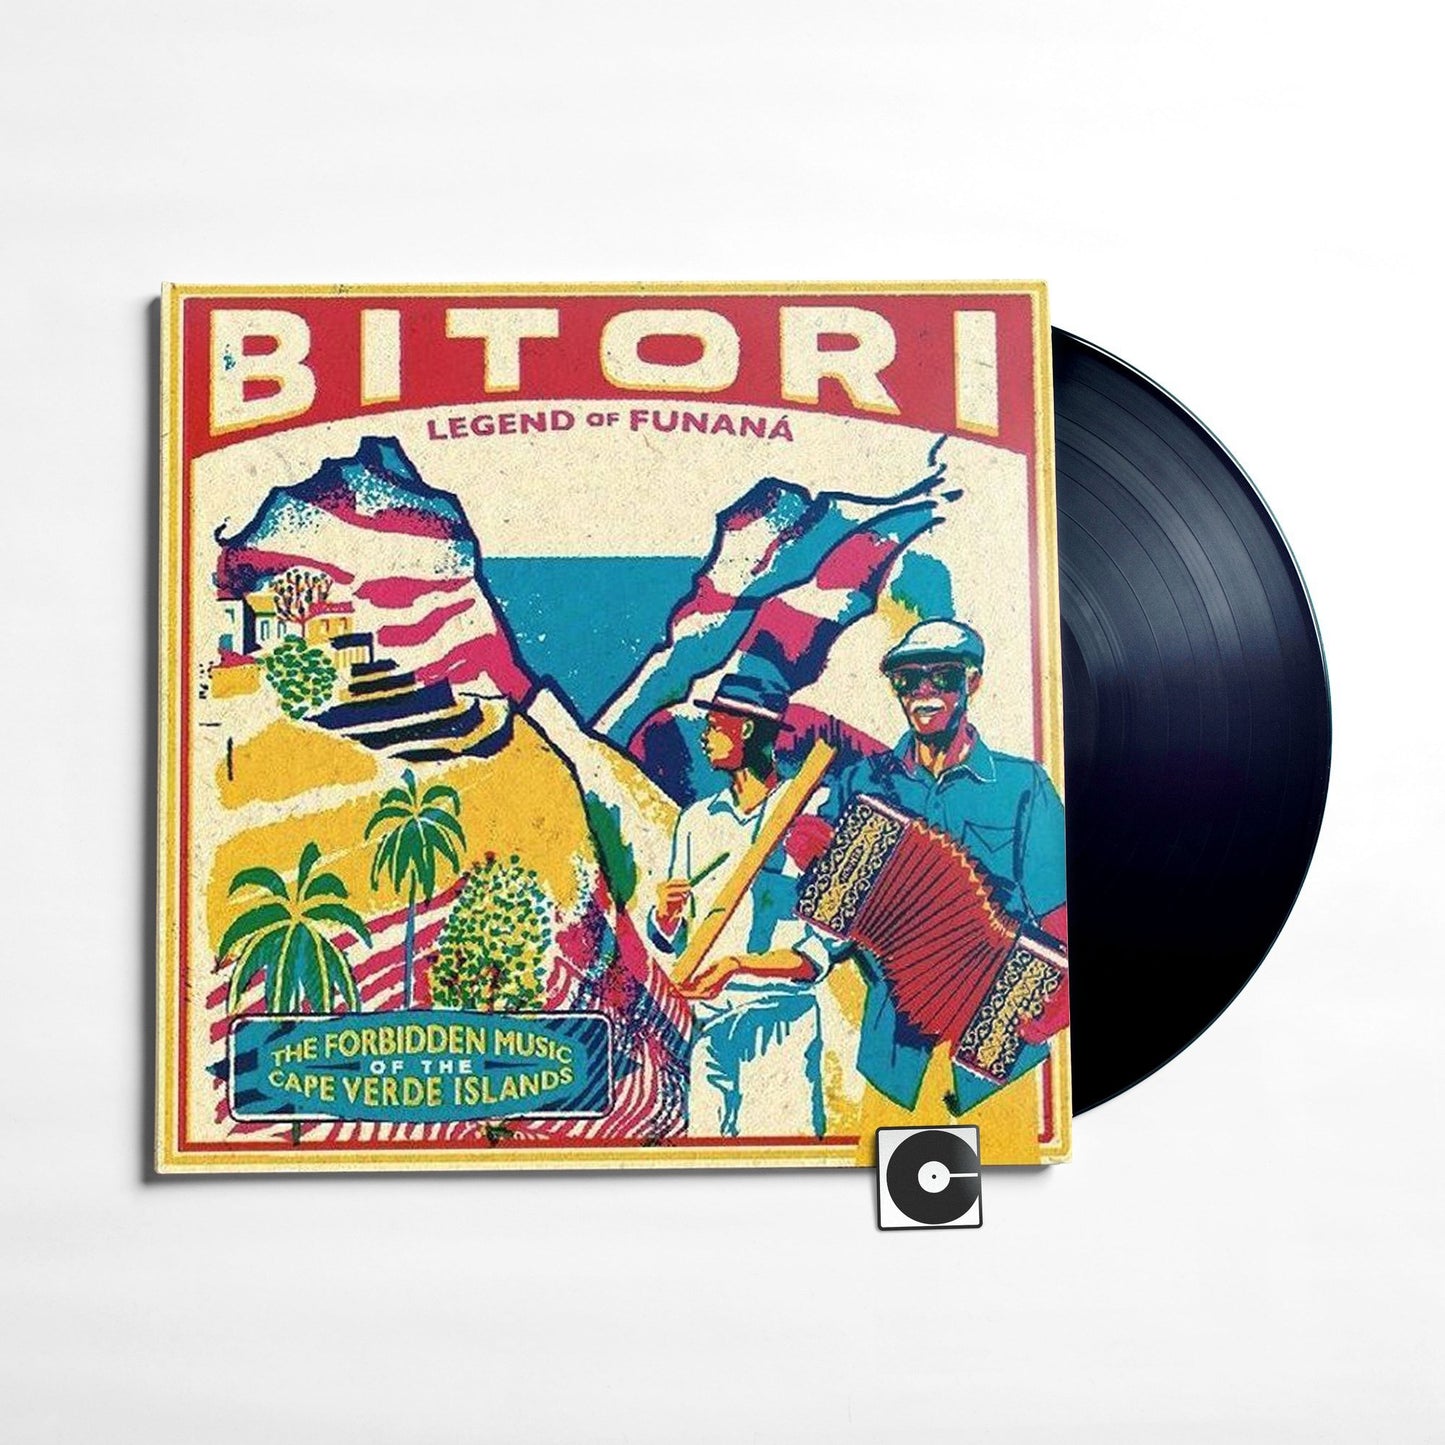 Bitori - "Legend Of Funana: Forbidden Music Of The Capes"